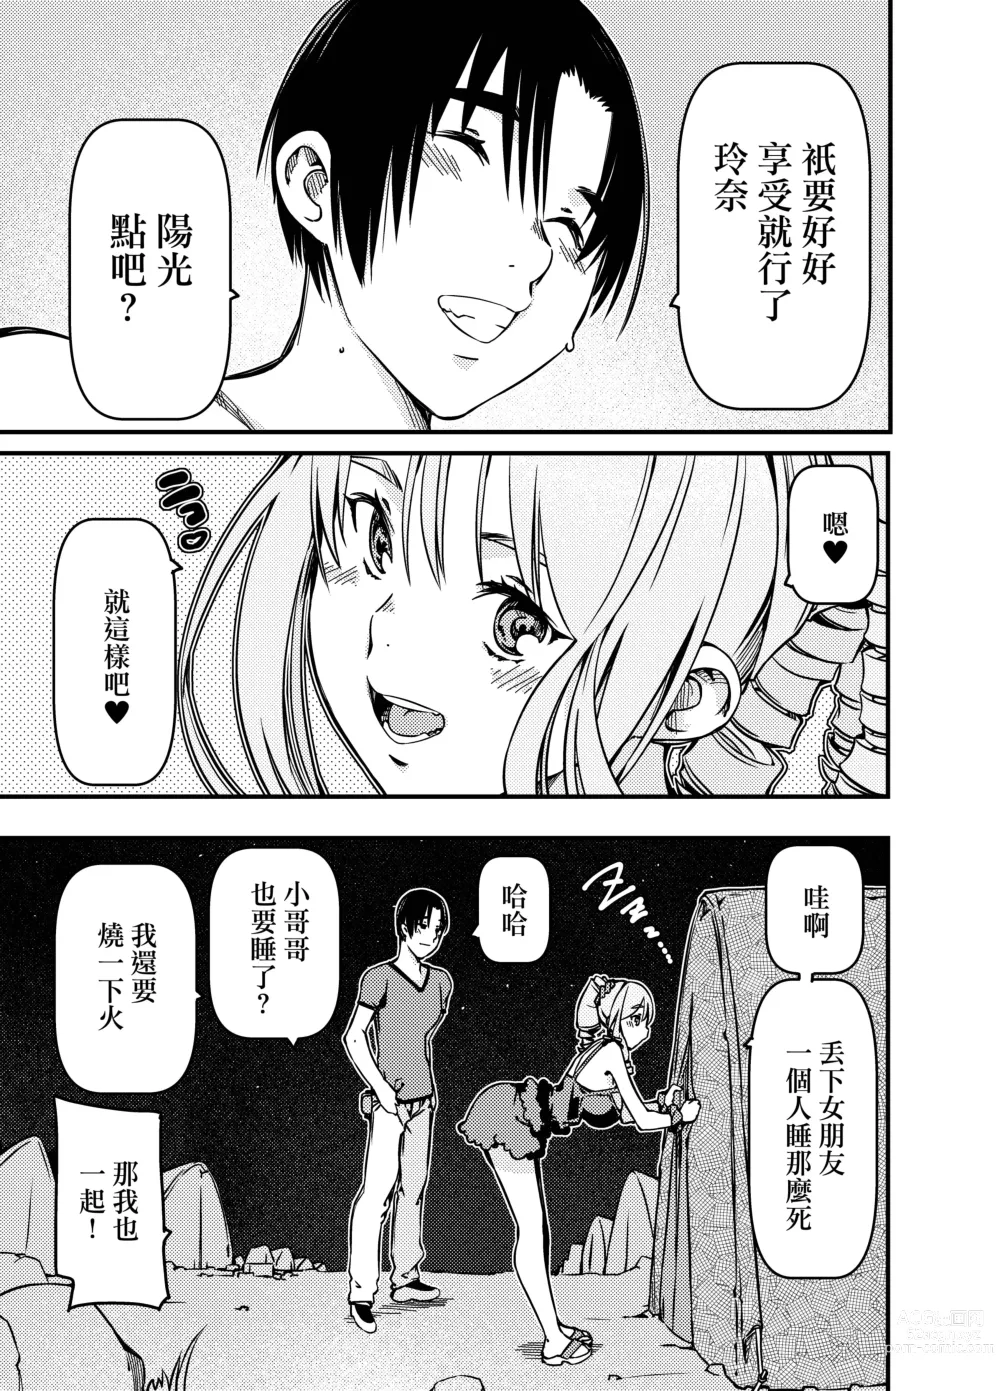 Page 14 of doujinshi 明明是個露營獨行俠卻被陽光辣妹貼上來了